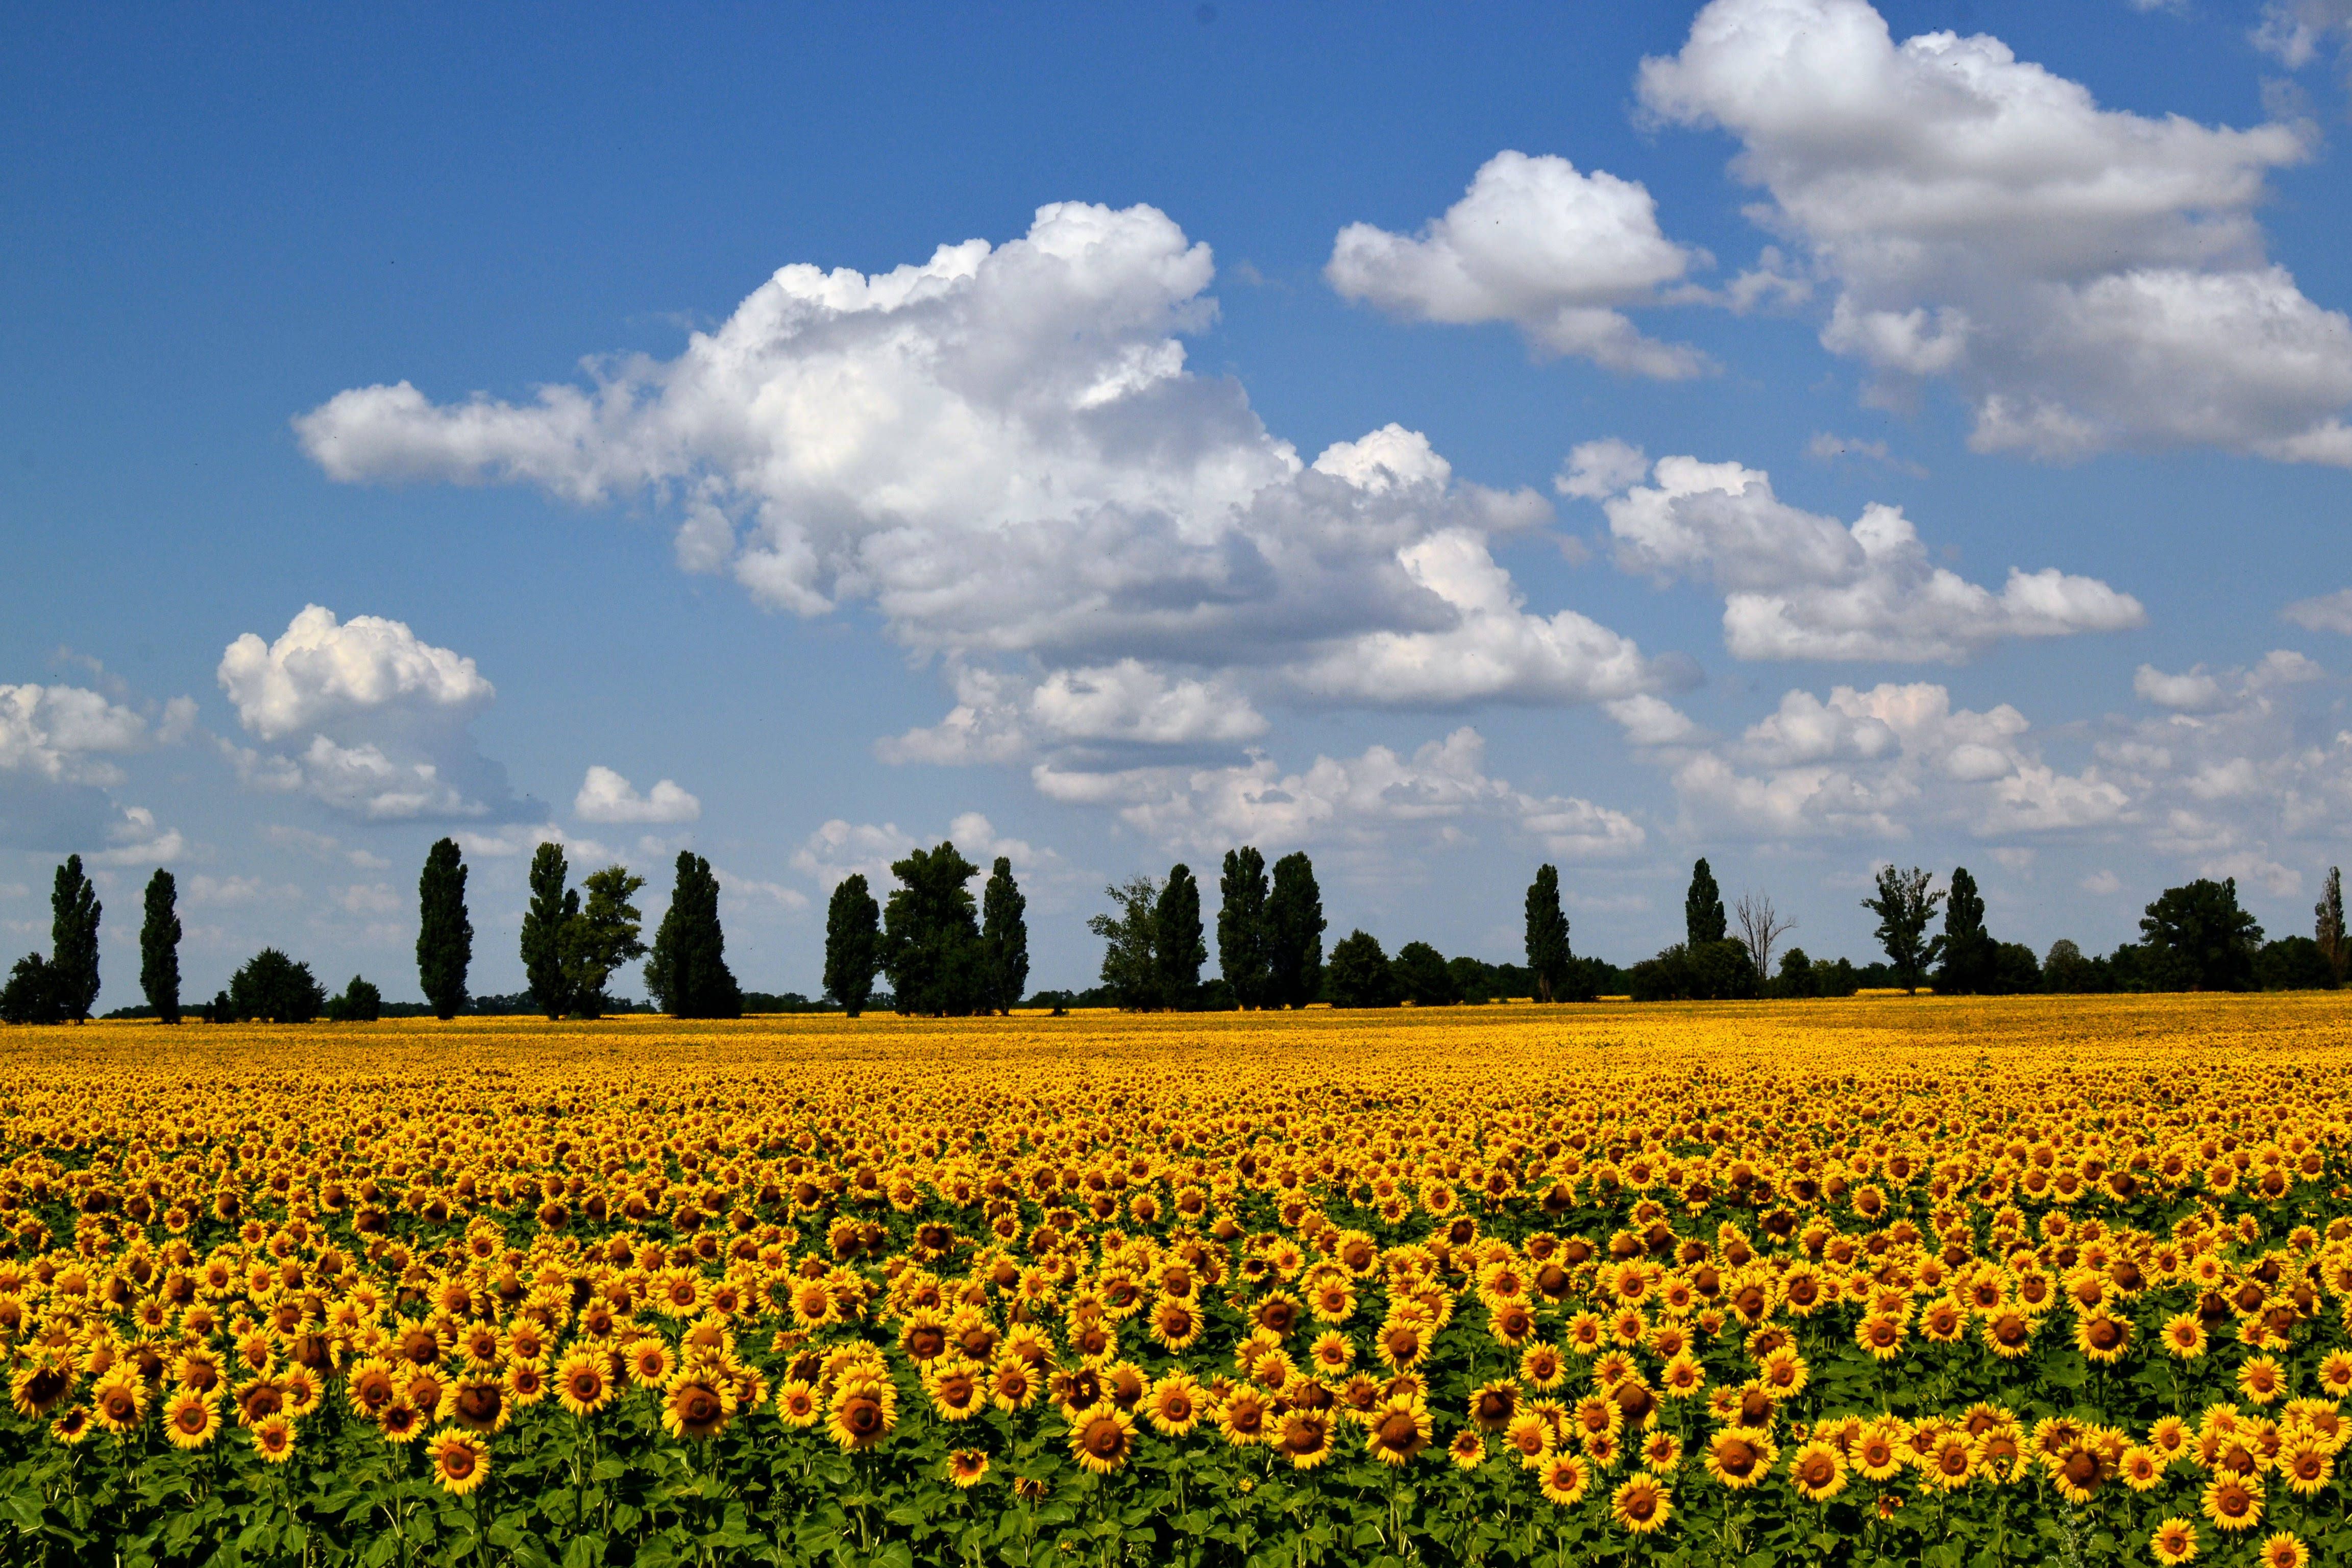 A beautiful sunflower field with a cloudy blue sky overhead. - Farm